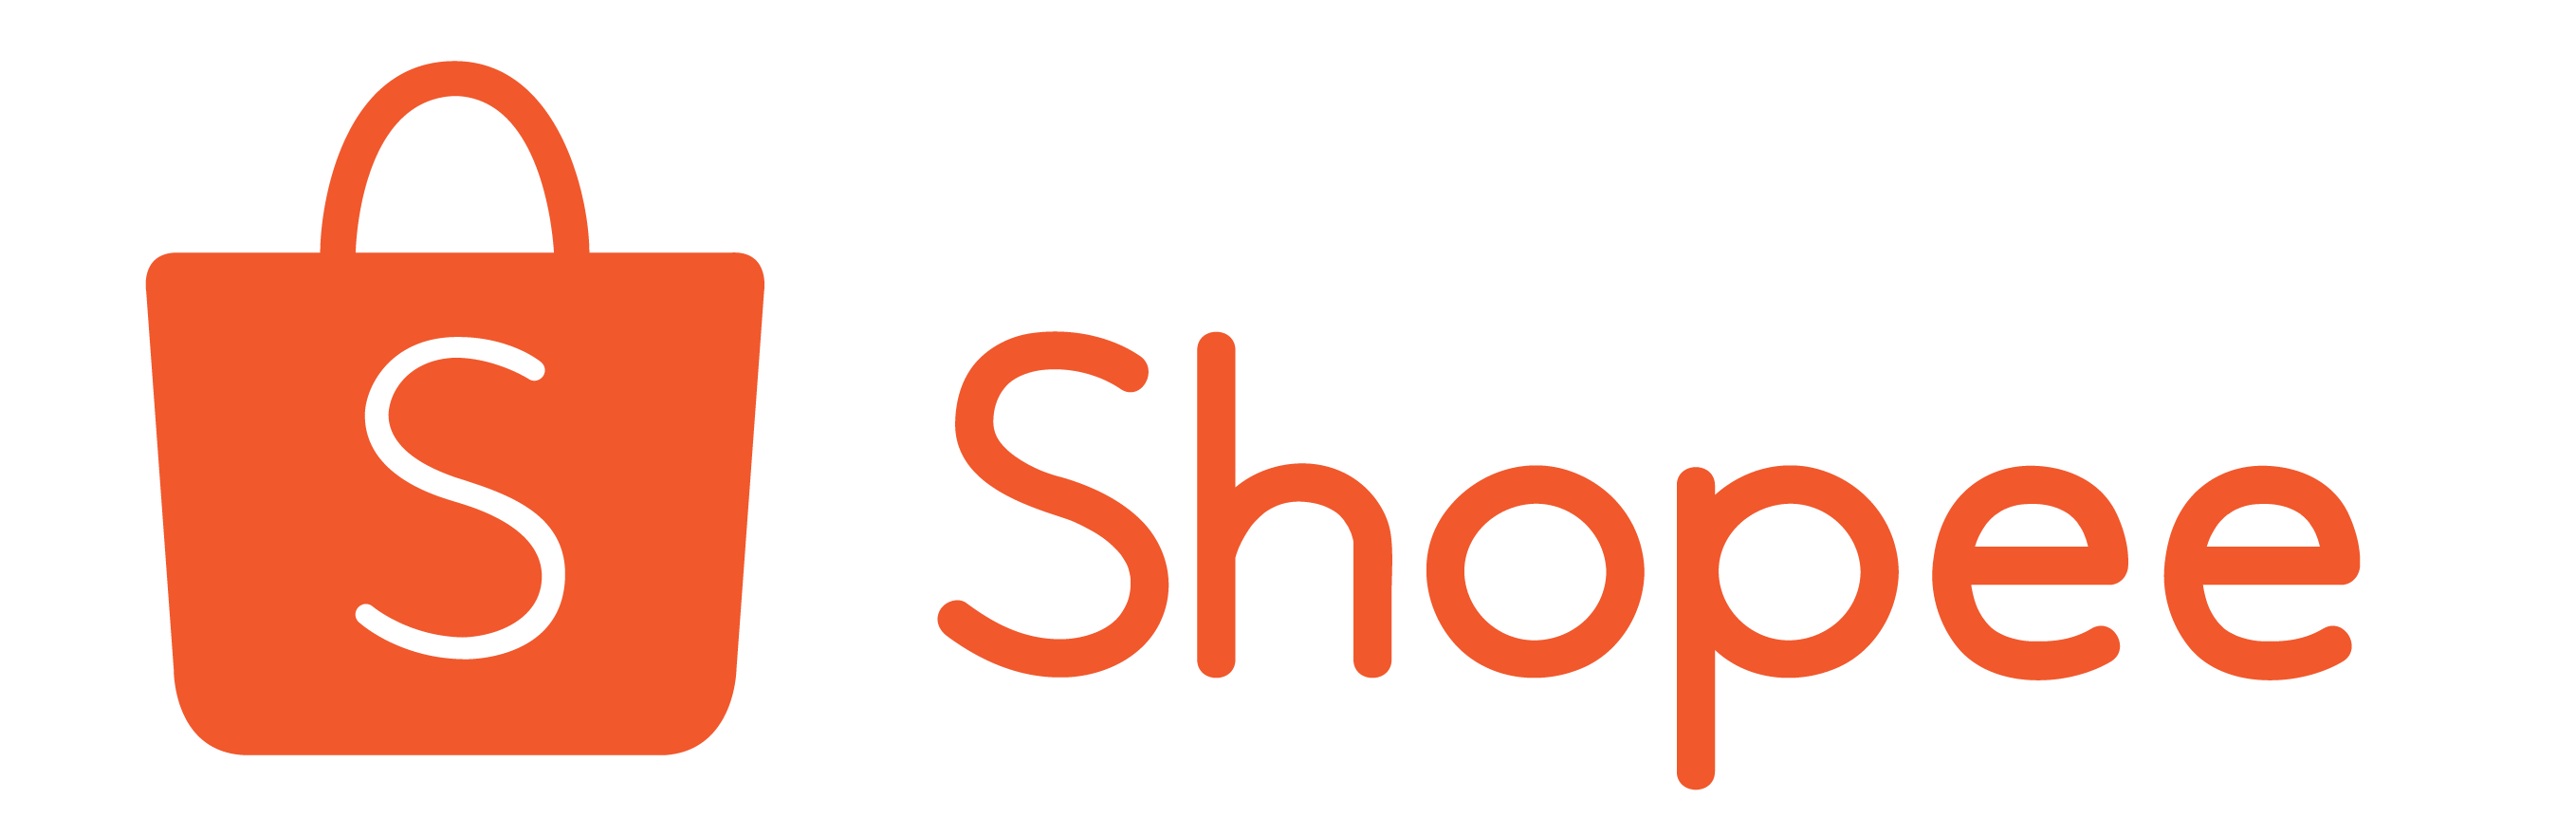 shopee logo digital economy forum mdcc #31408